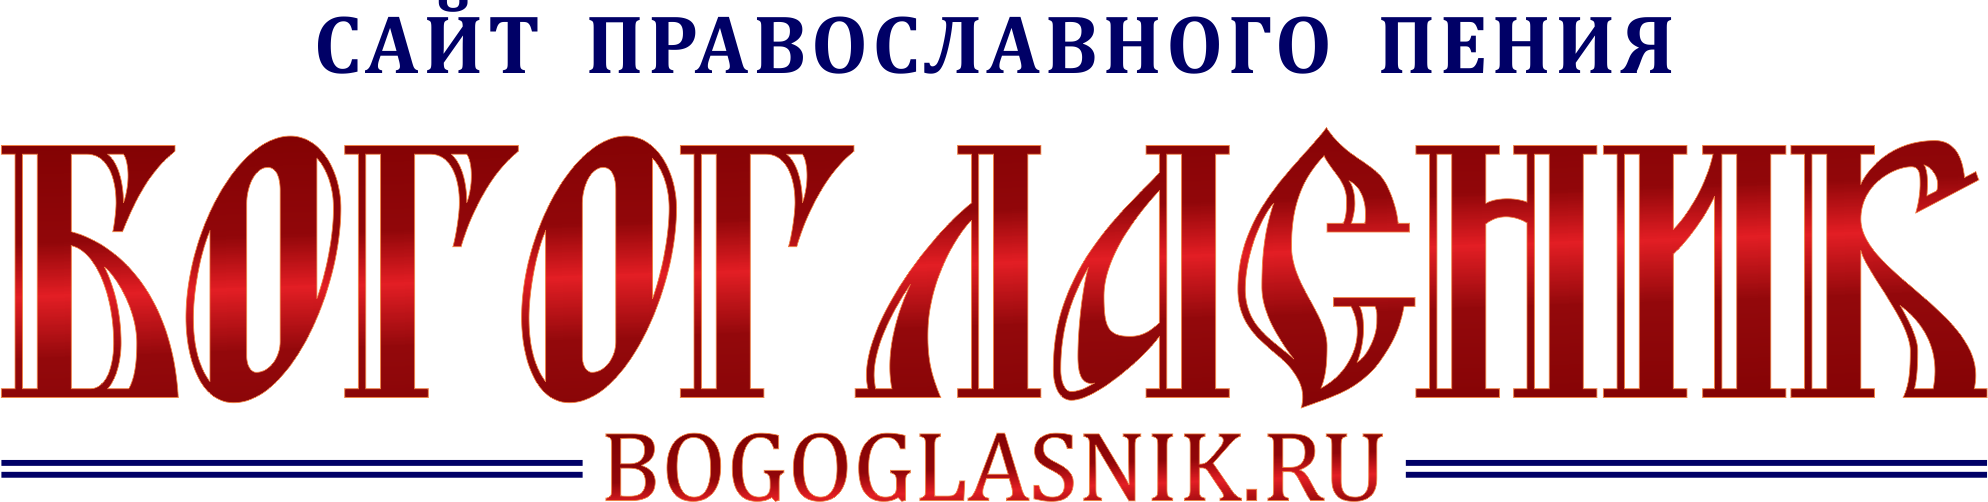 Логотип сайта Богогласник